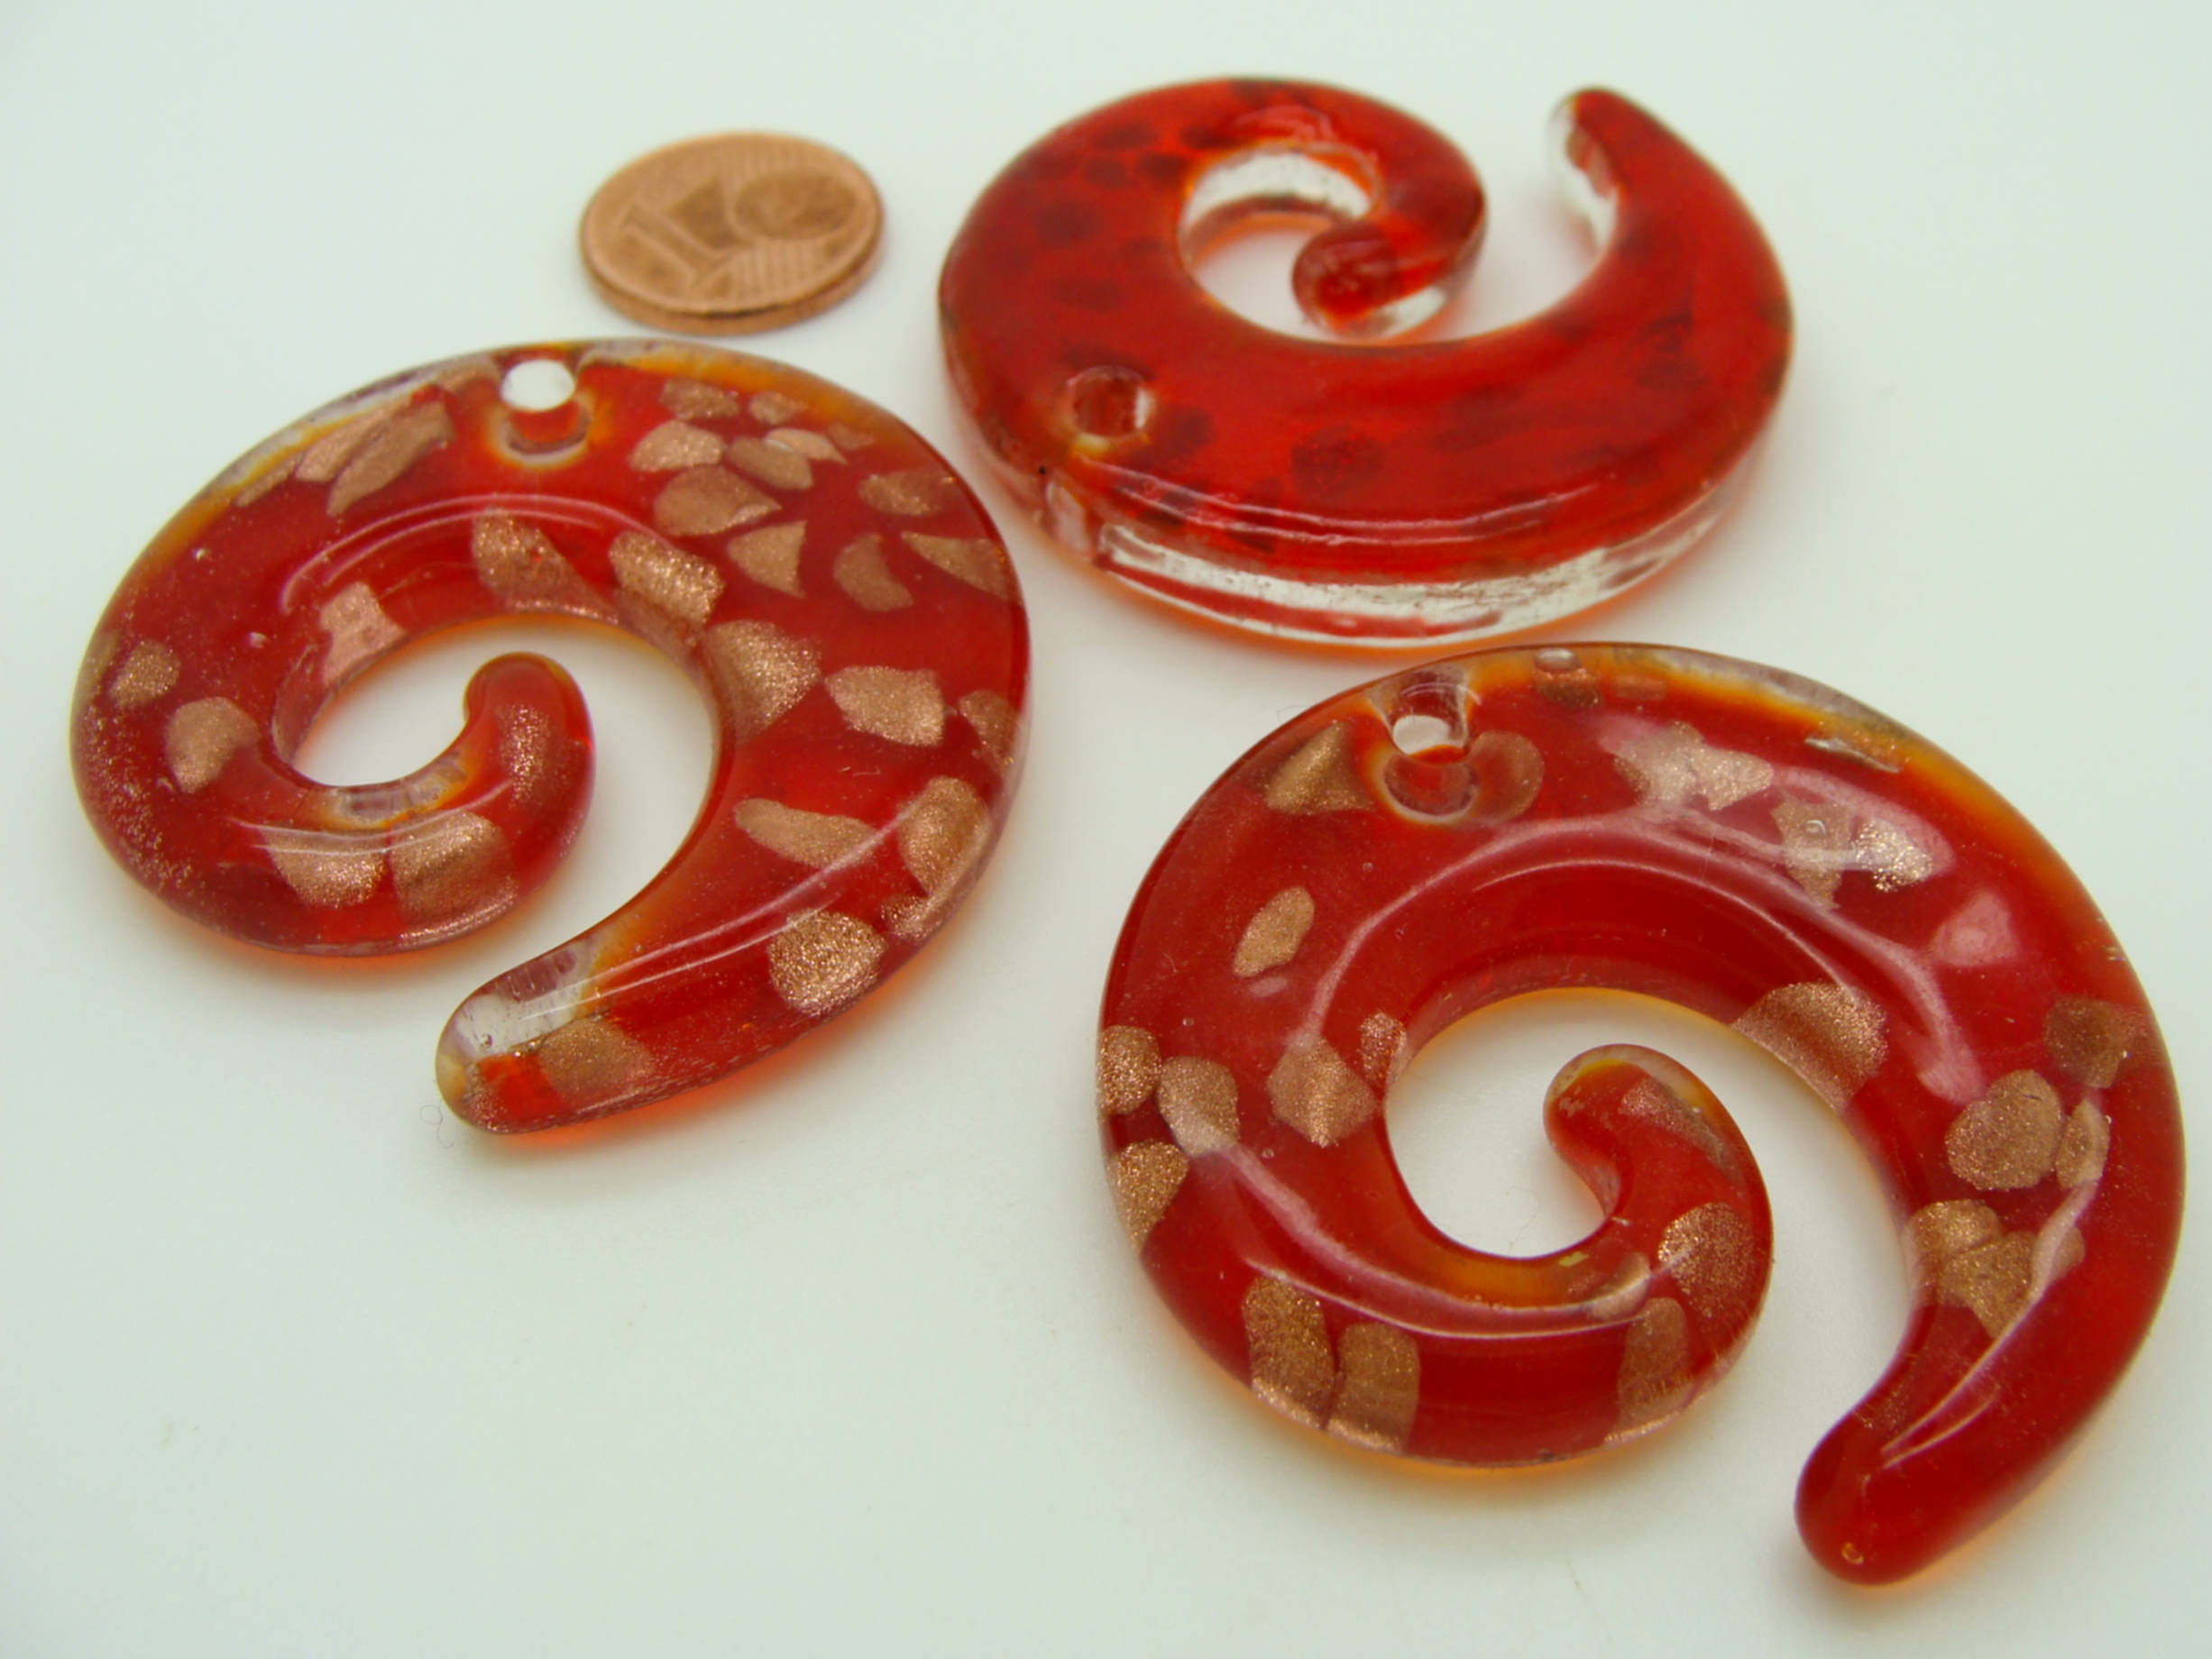 Pend-267-4 pendentif spirale rouge dore verre